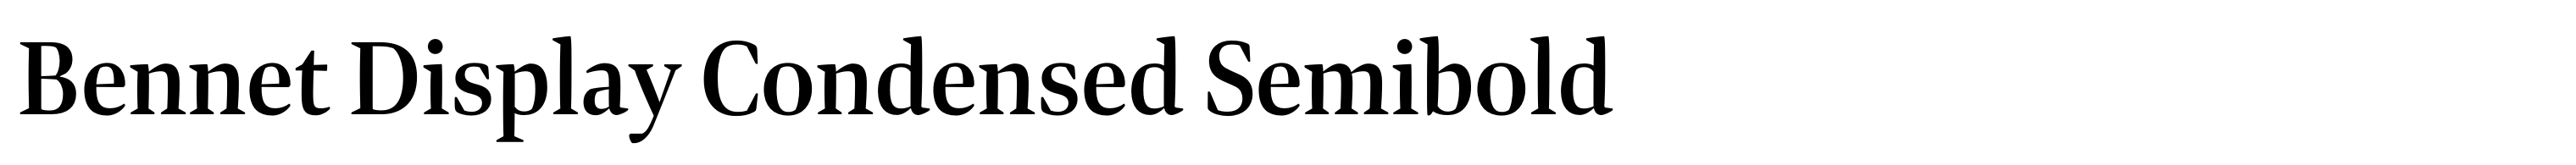 Bennet Display Condensed Semibold